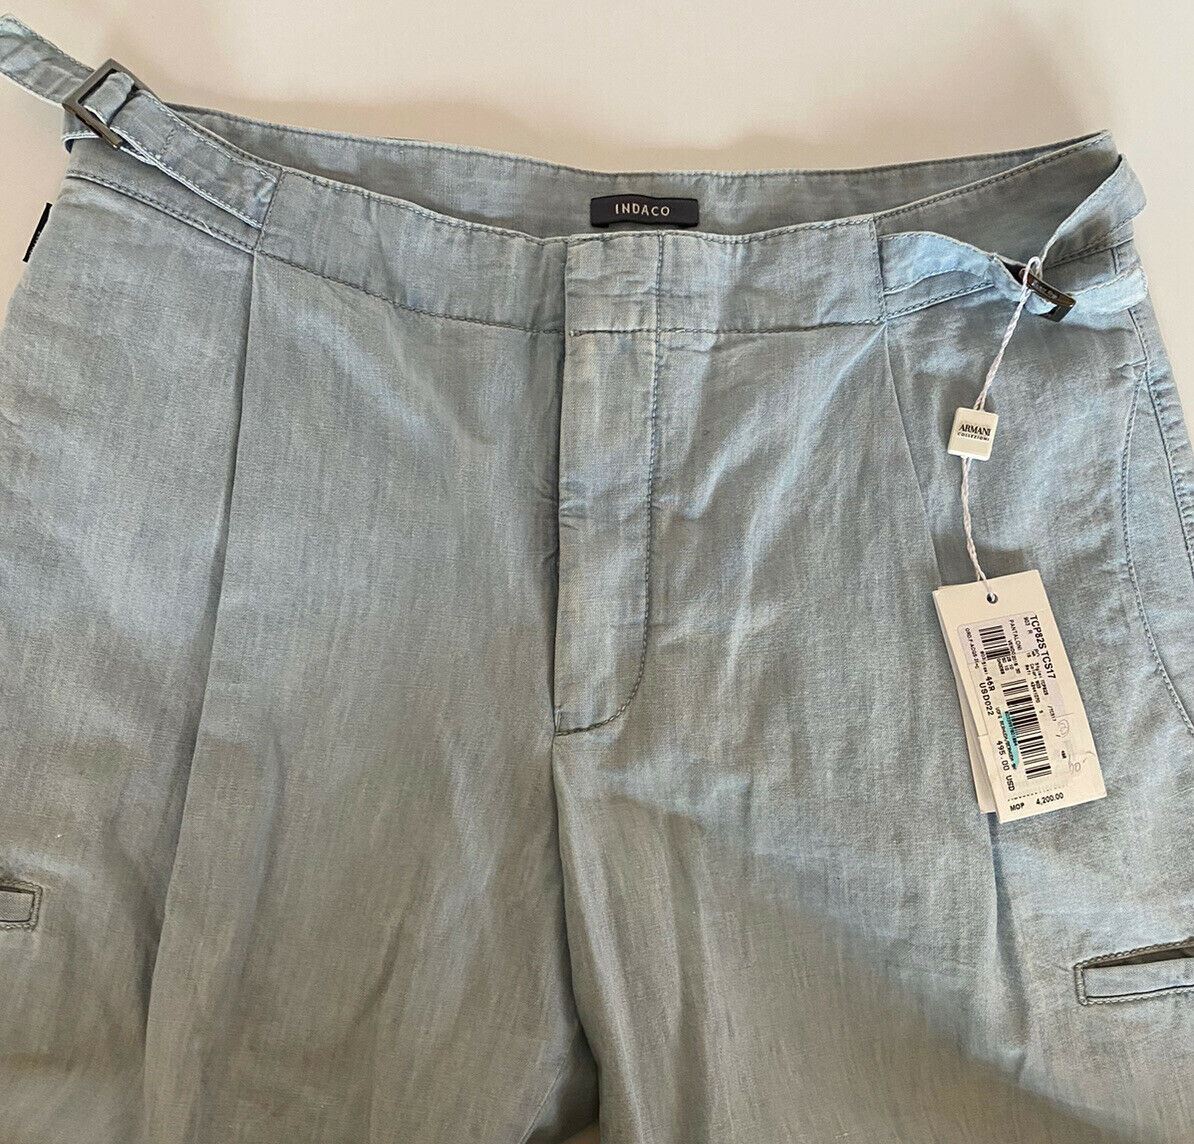 Neu mit Etikett: 495 $ Armani Collezioni Herren-Hellblau-Shorts, Größe 30 US (46 Eu) TCP82S